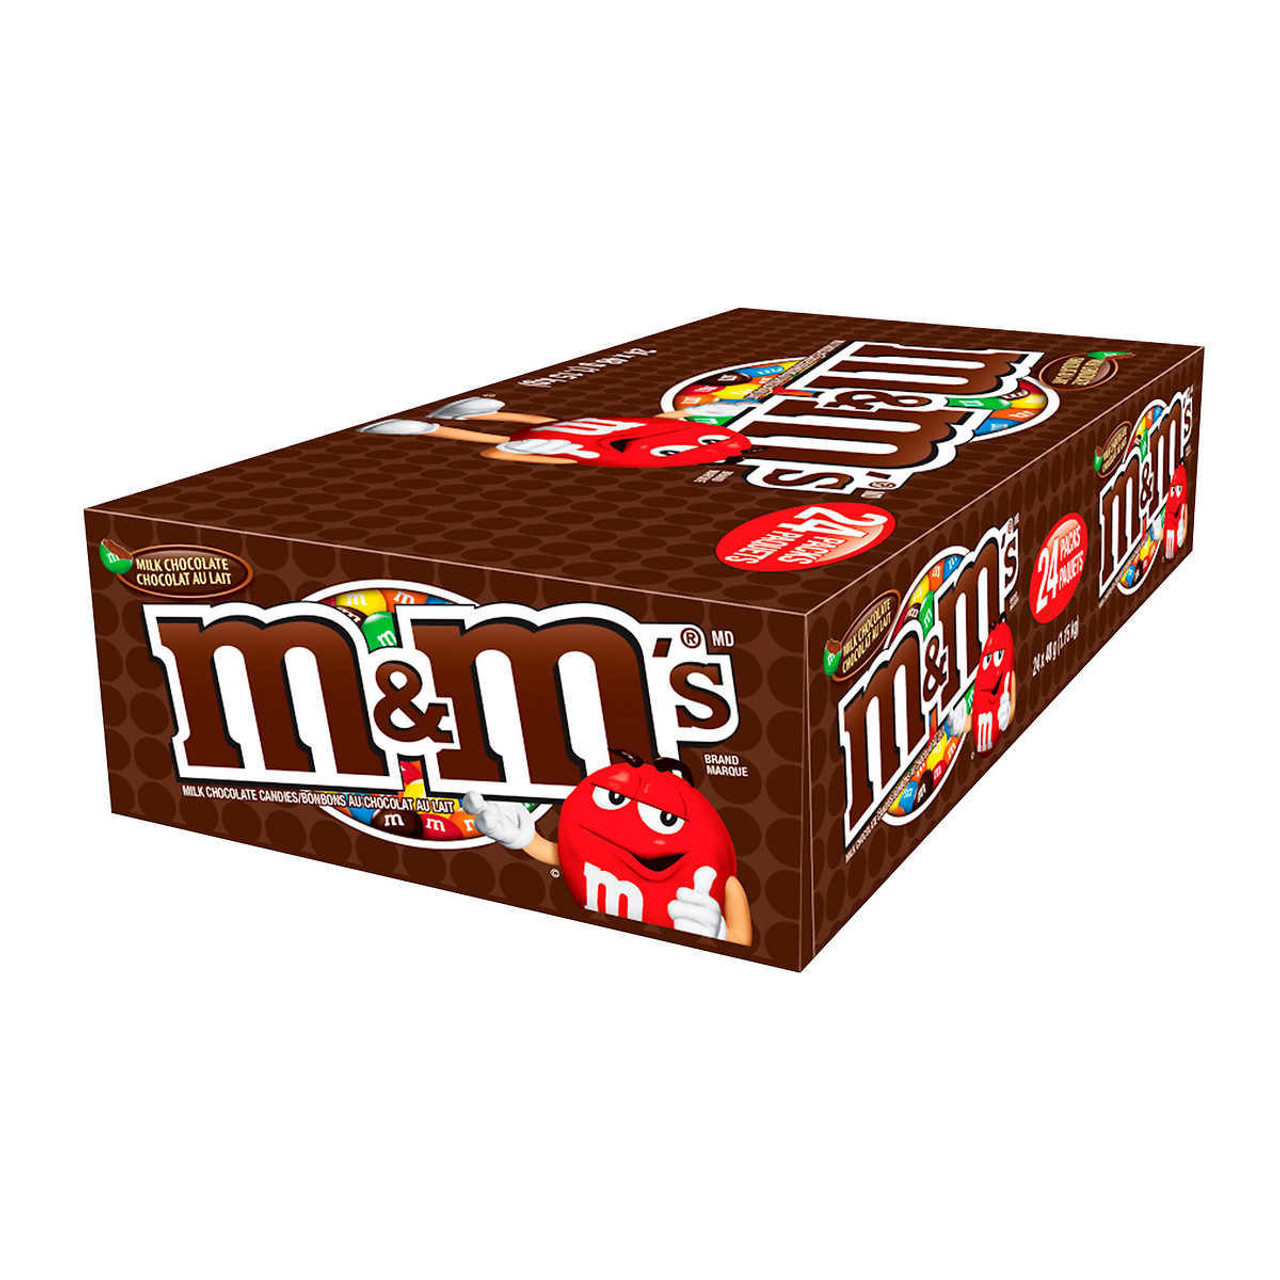 Get BIG Savings on 1 Kg of M&M's Peanut (1kg Party Bag) M&M's